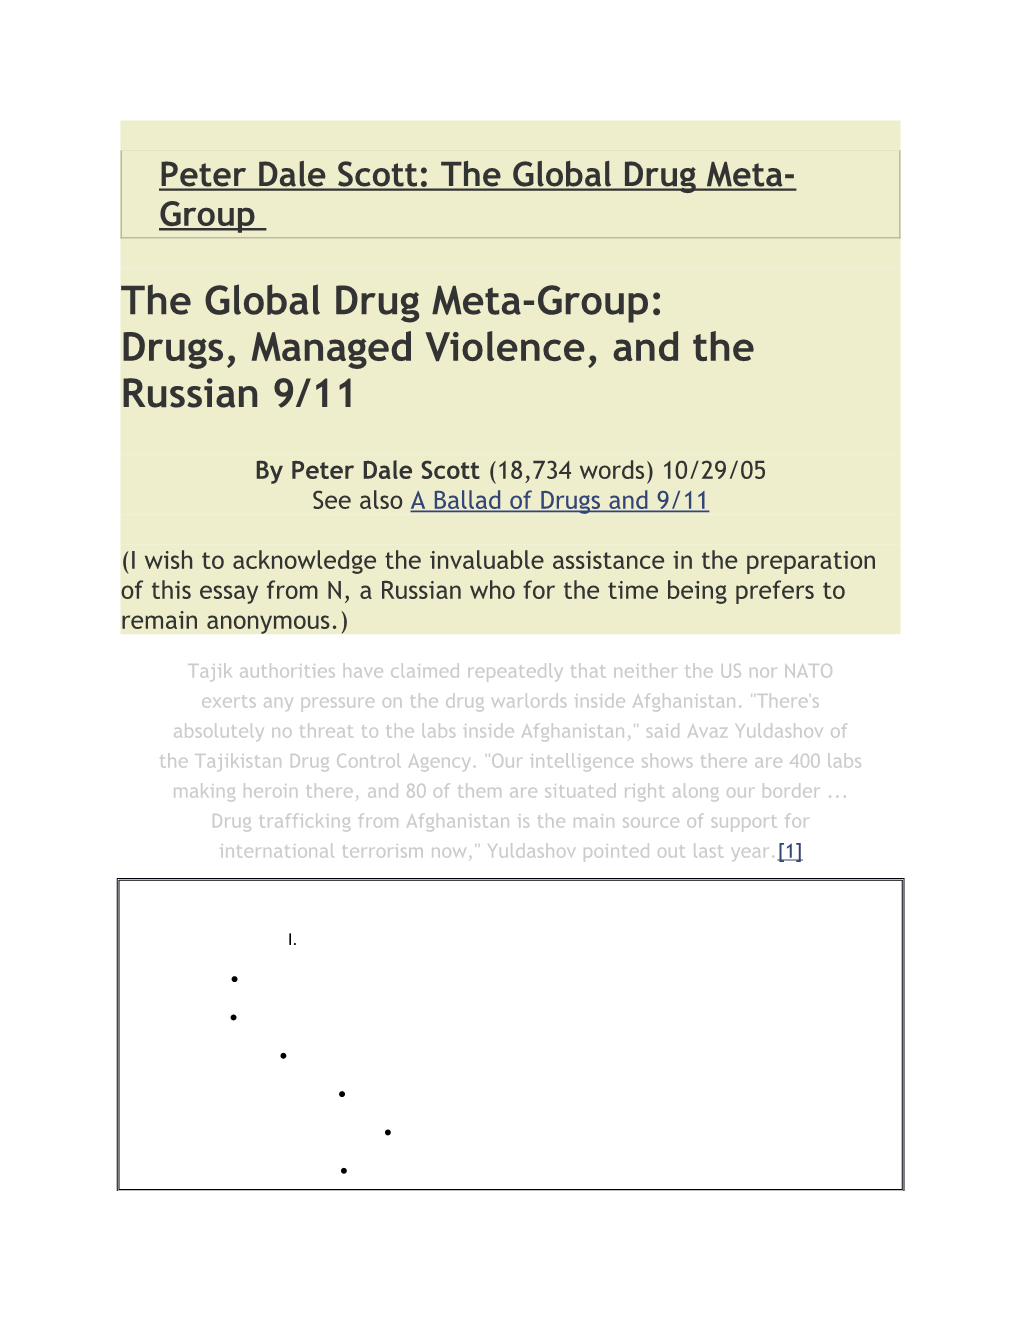 Peter Dale Scott: the Global Drug Meta-Group